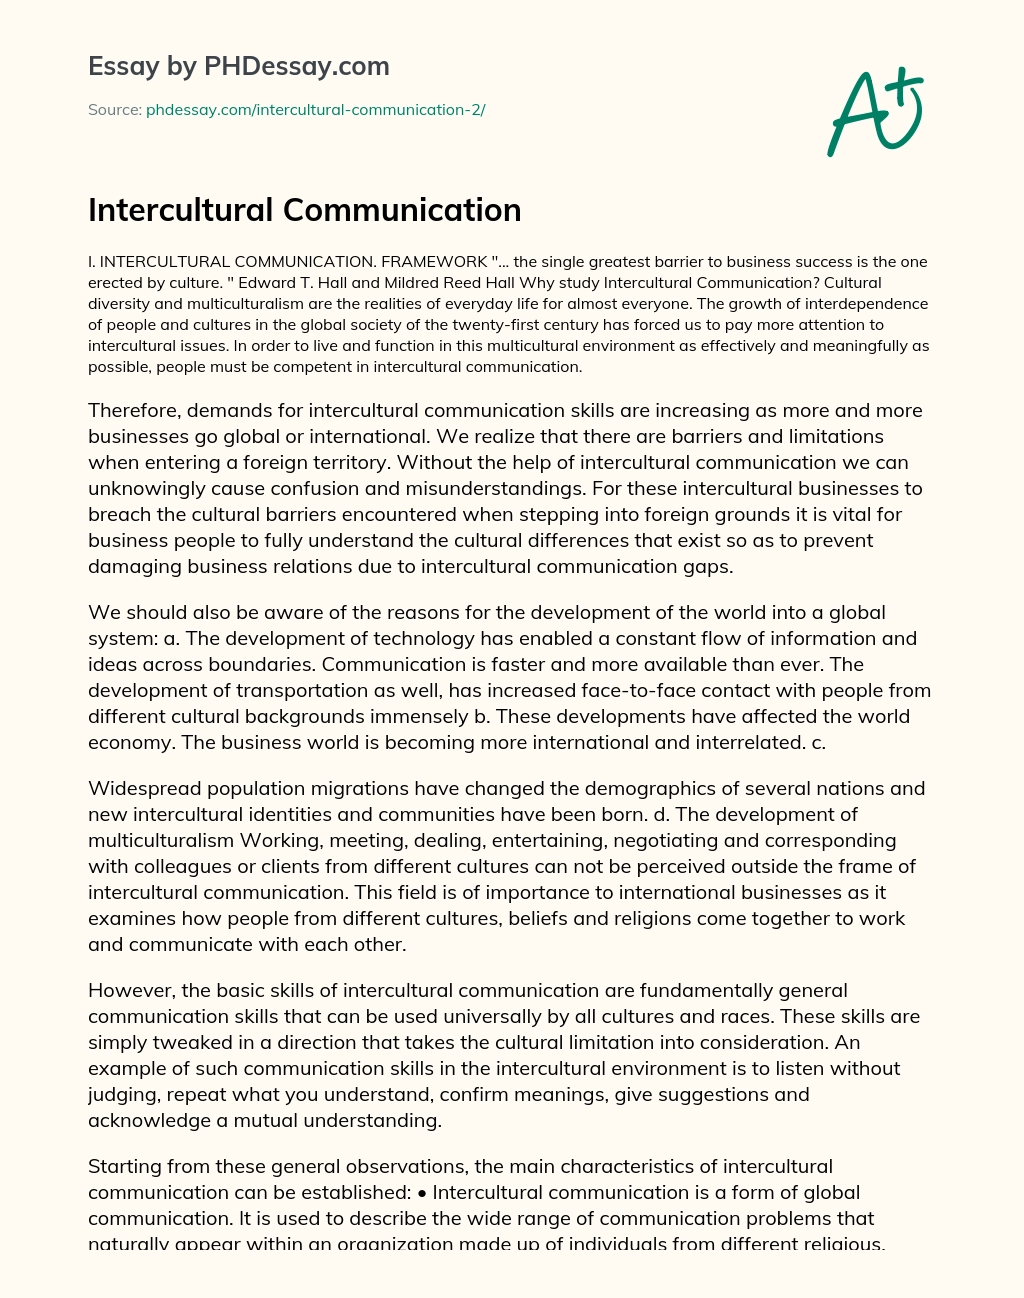 Intercultural Communication essay